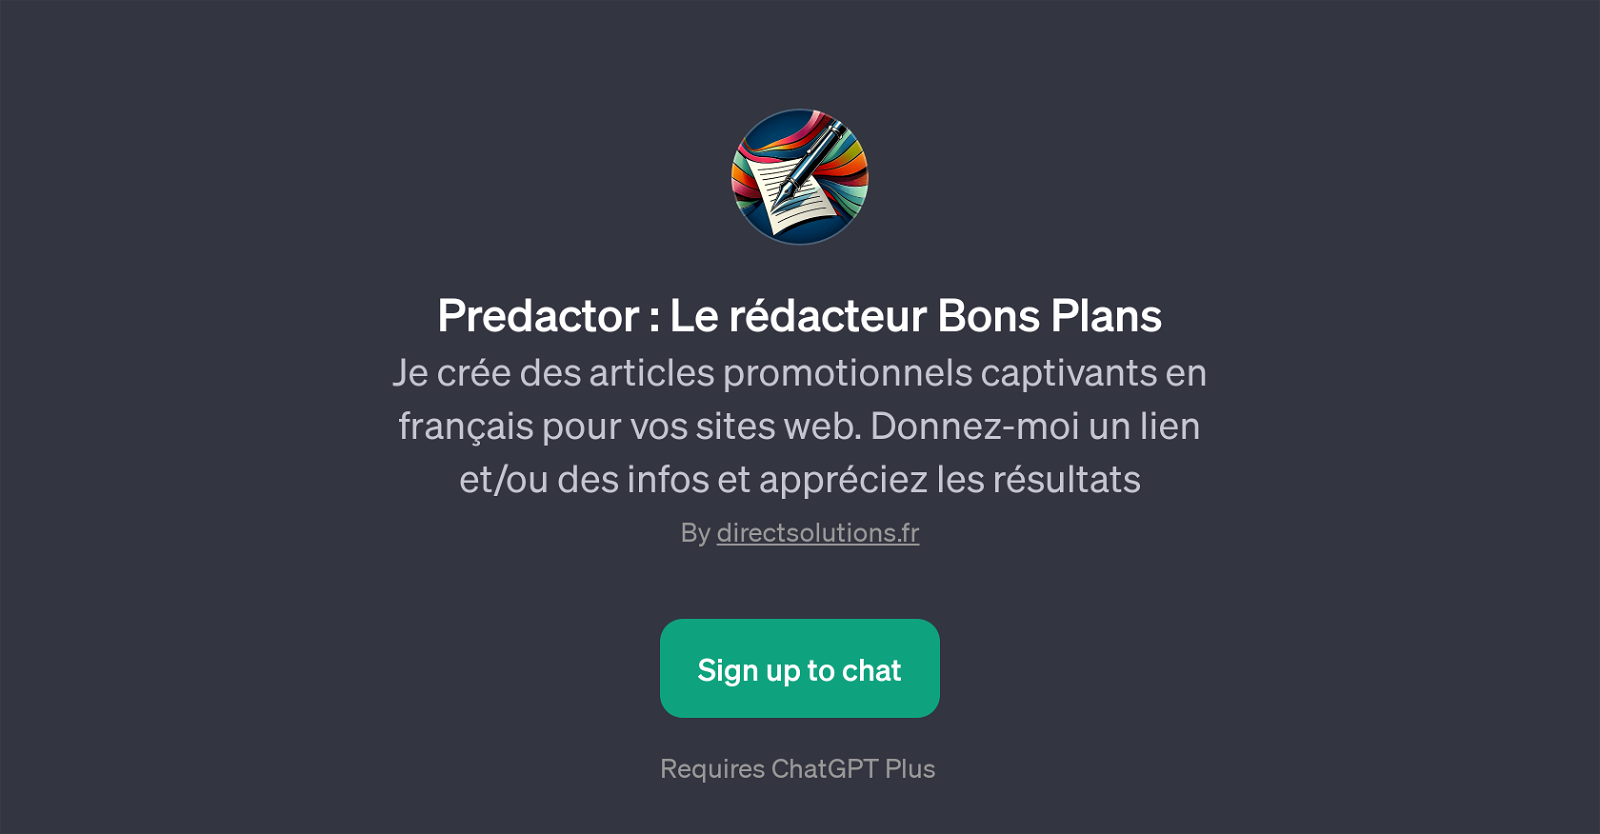 Predactor : Le rdacteur Bons Plans website